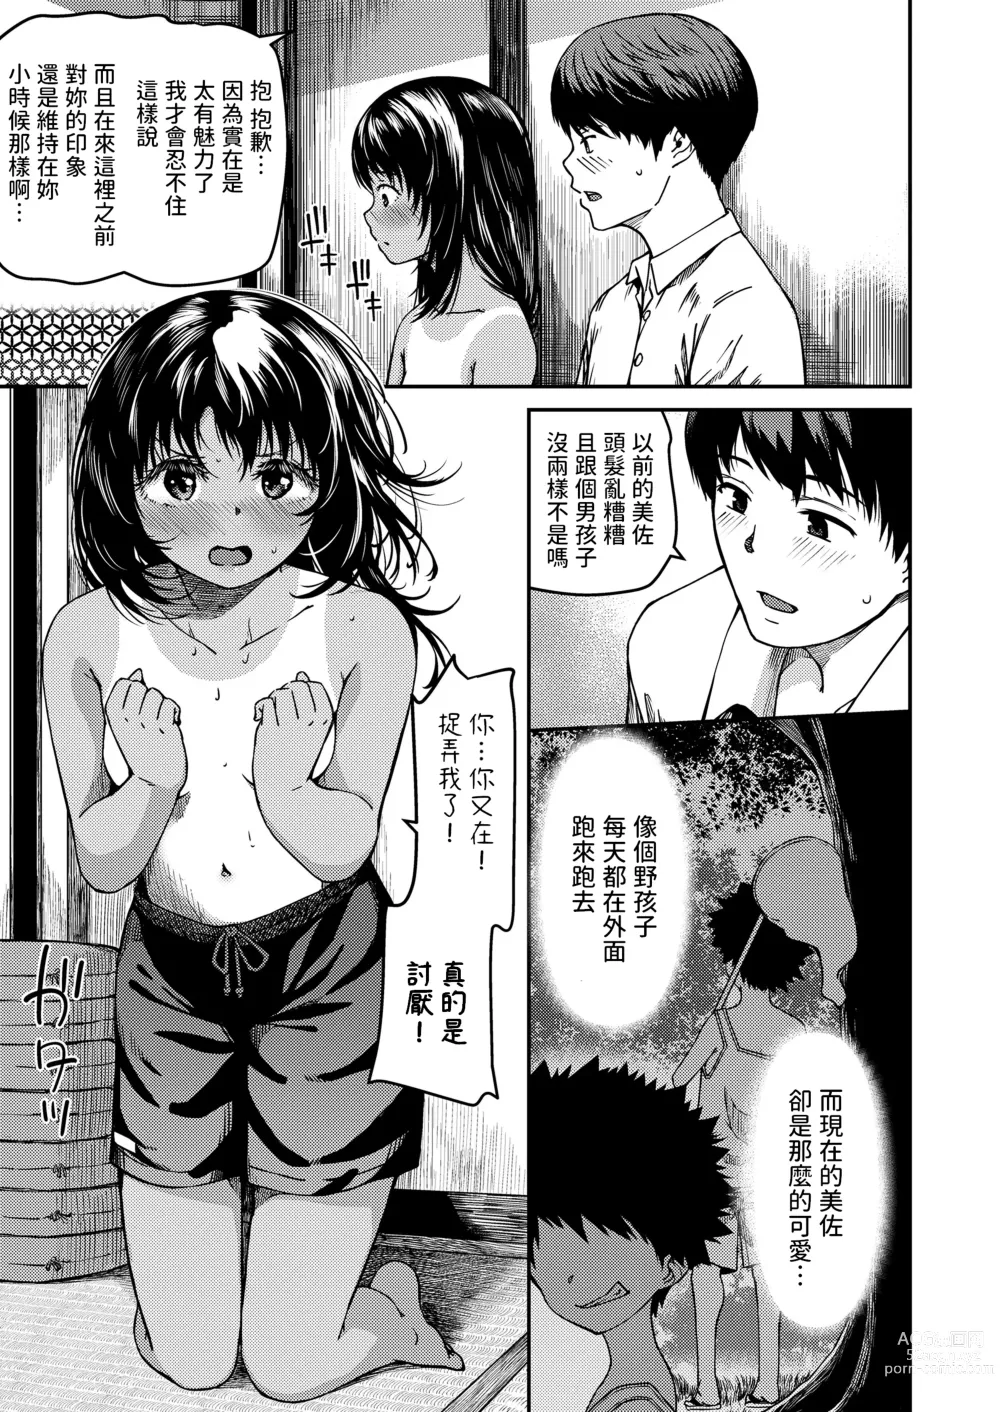 Page 5 of manga Inaka de Hisabisa ni Au Itoko